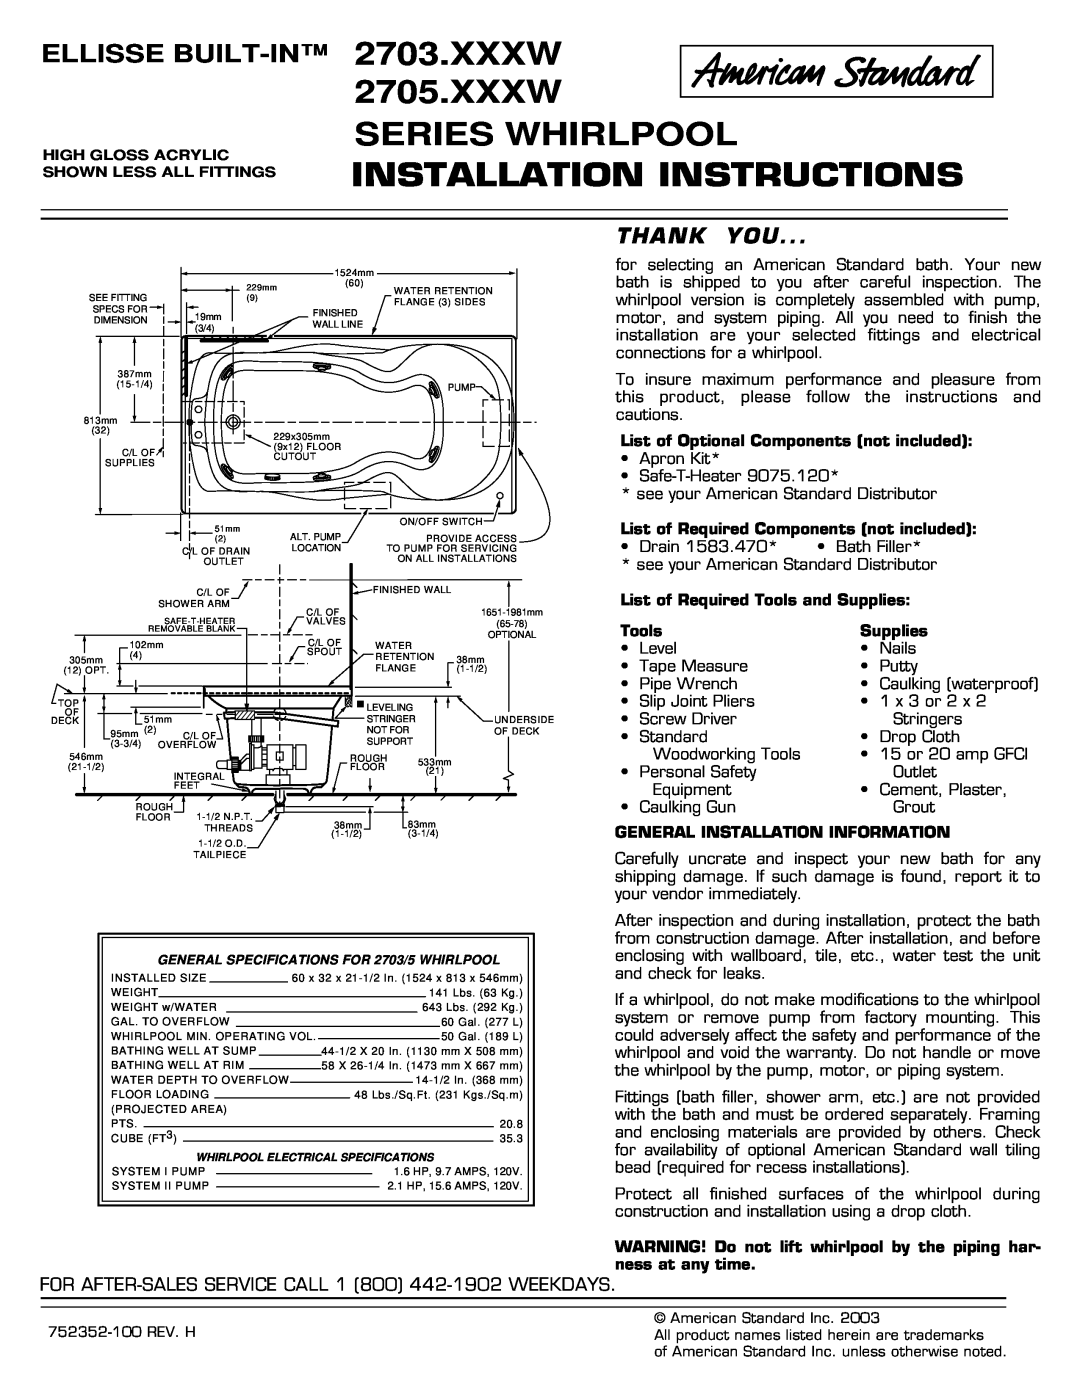 American Standard 2703.XXXW Series installation instructions Xxxw Series Whirlpool, Installation Instructions, Thank You 